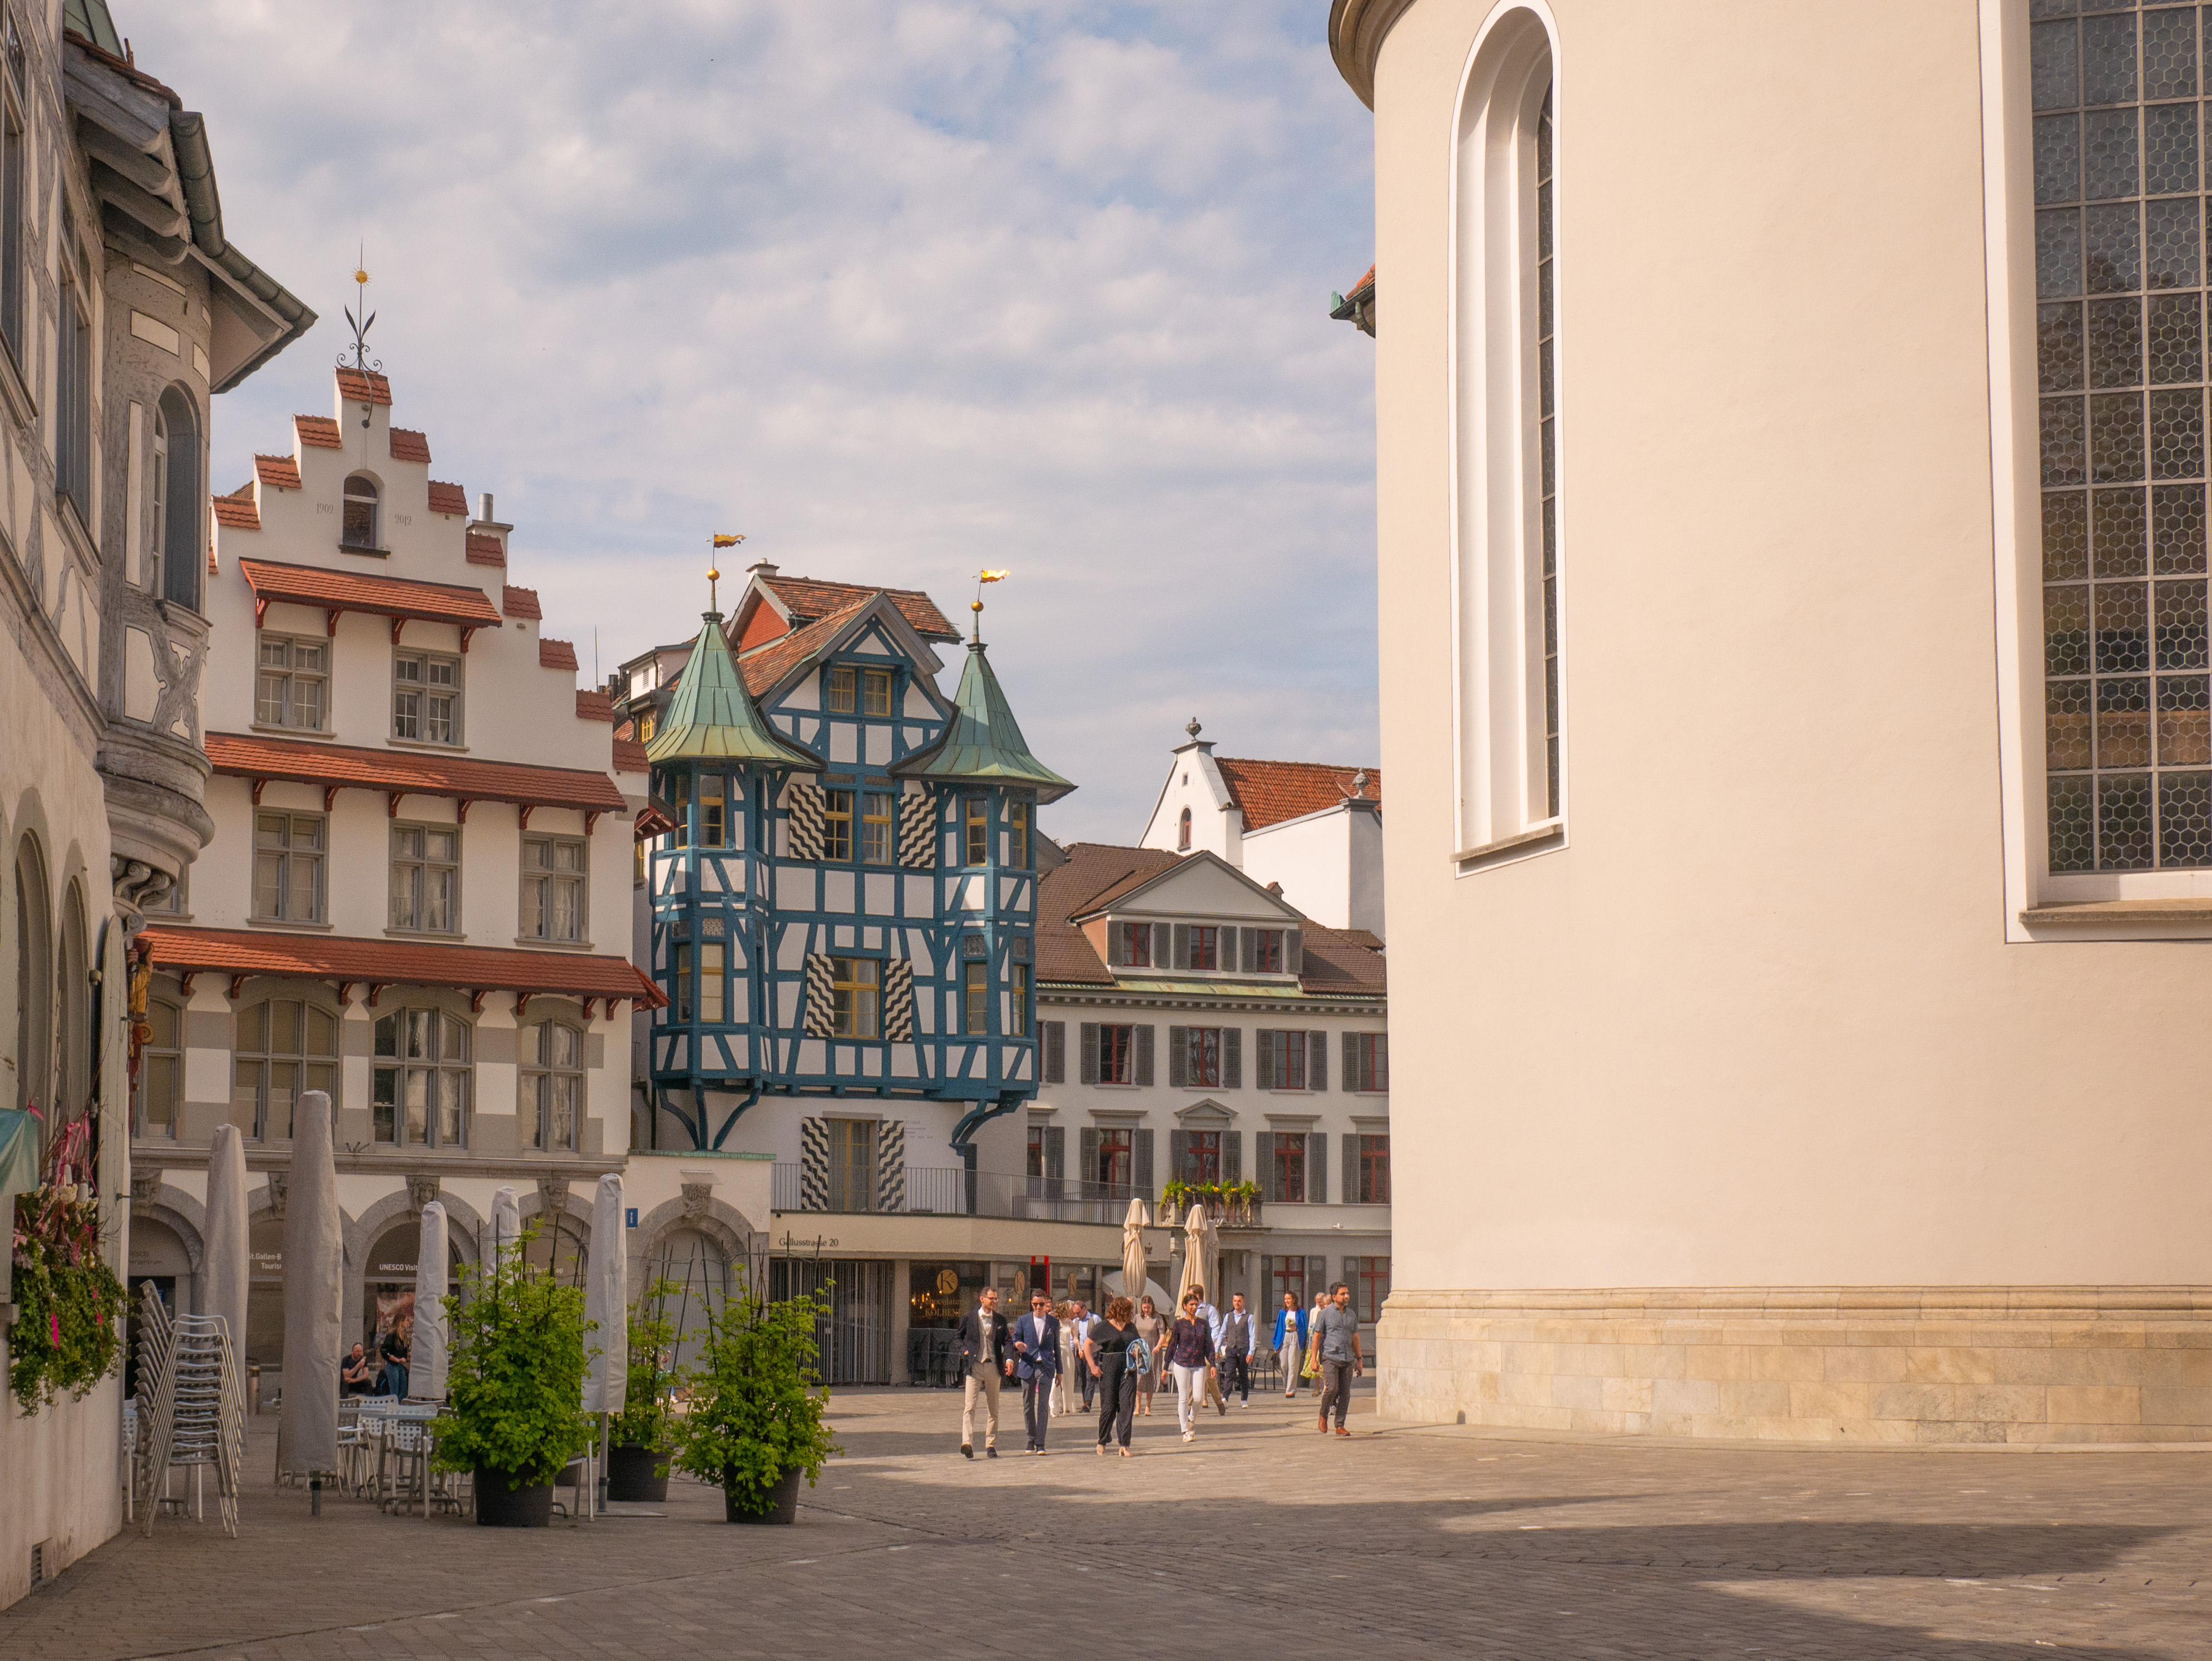 Fairytale buildings in St. Gallen Old Town